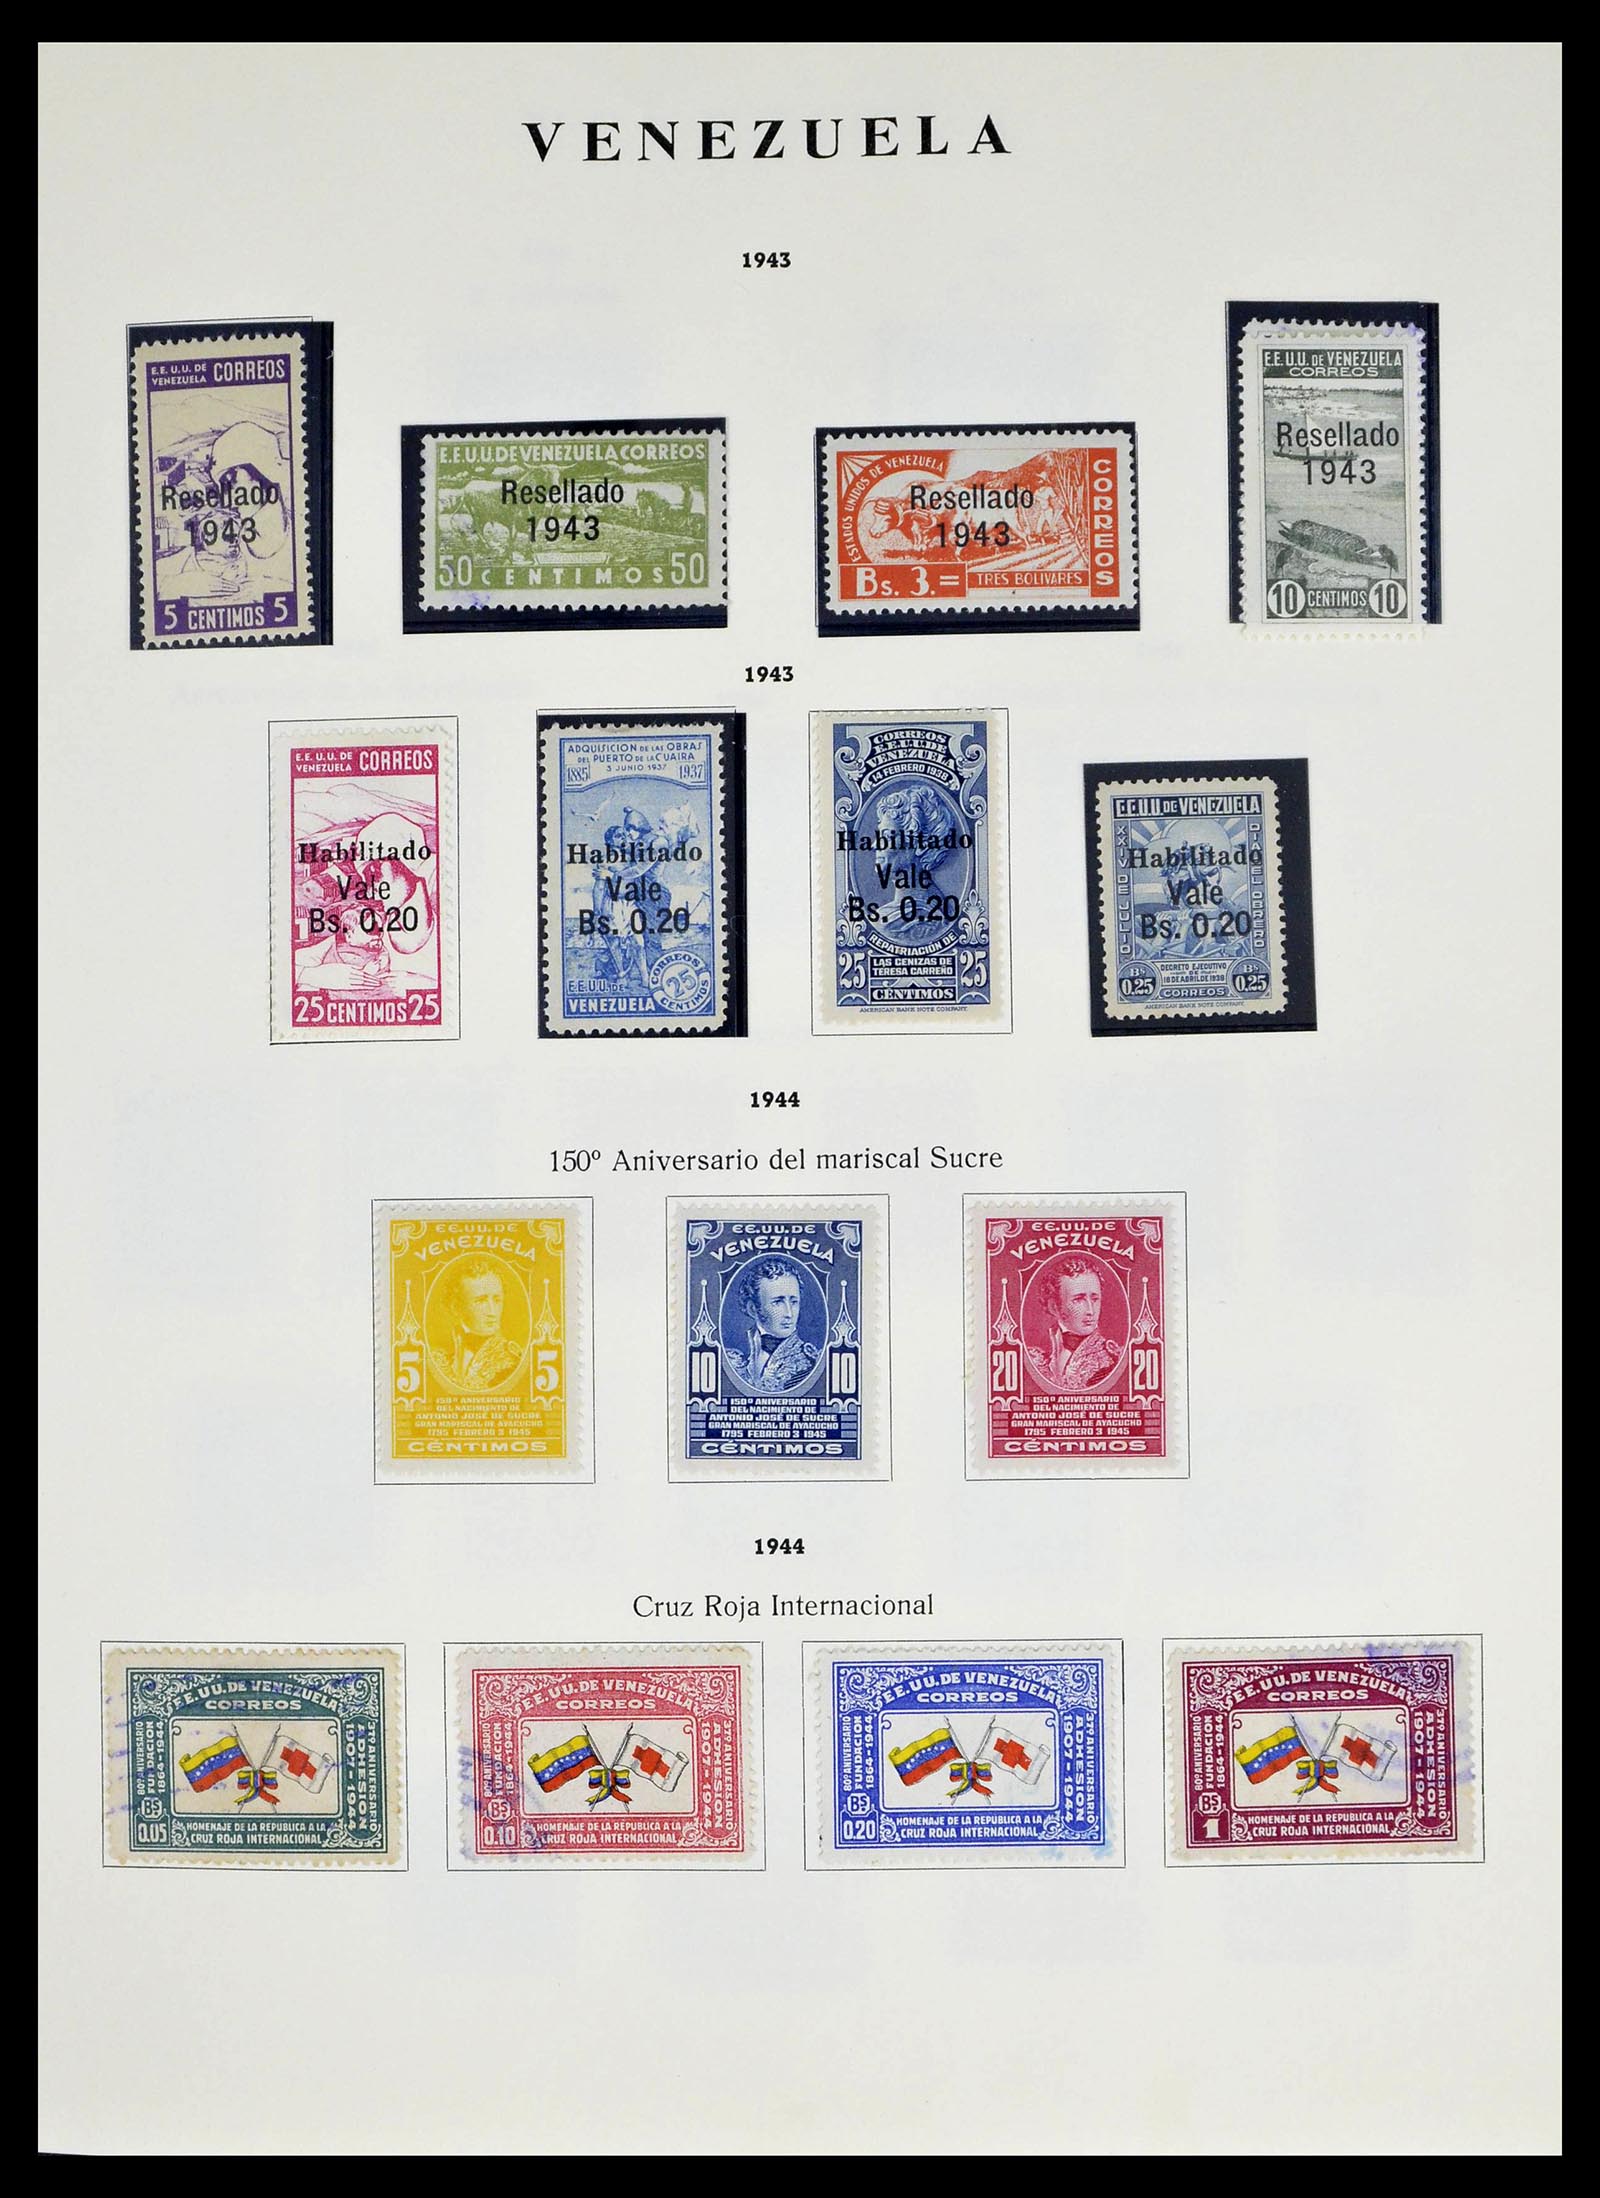 39223 0018 - Stamp collection 39223 Venezuela 1859-1984.